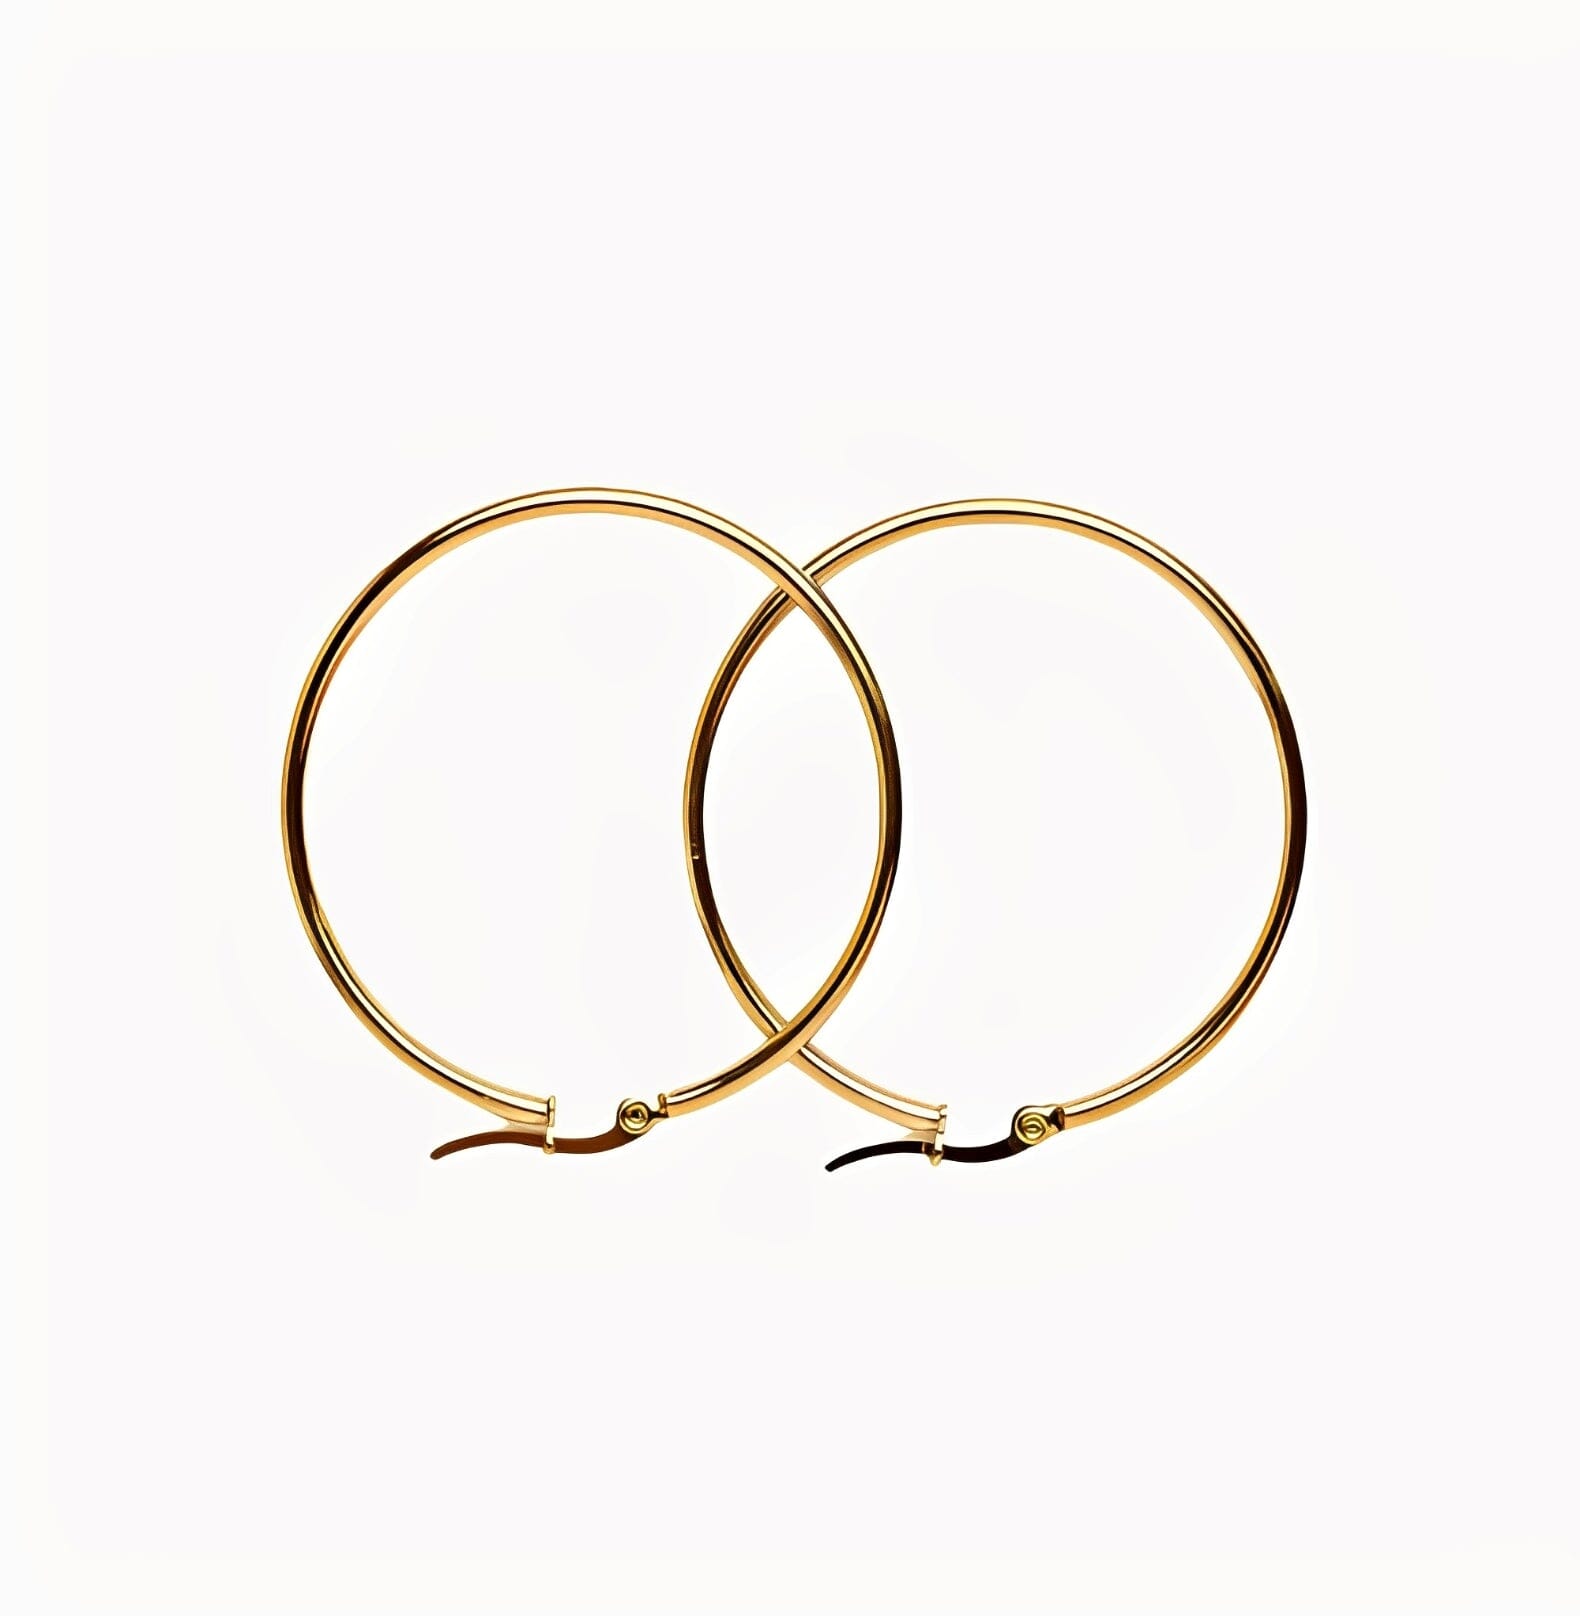 MEDIUM HOOP EARRINGS braclet Yubama Jewelry Online Store - The Elegant Designs of Gold and Silver ! 35mm 